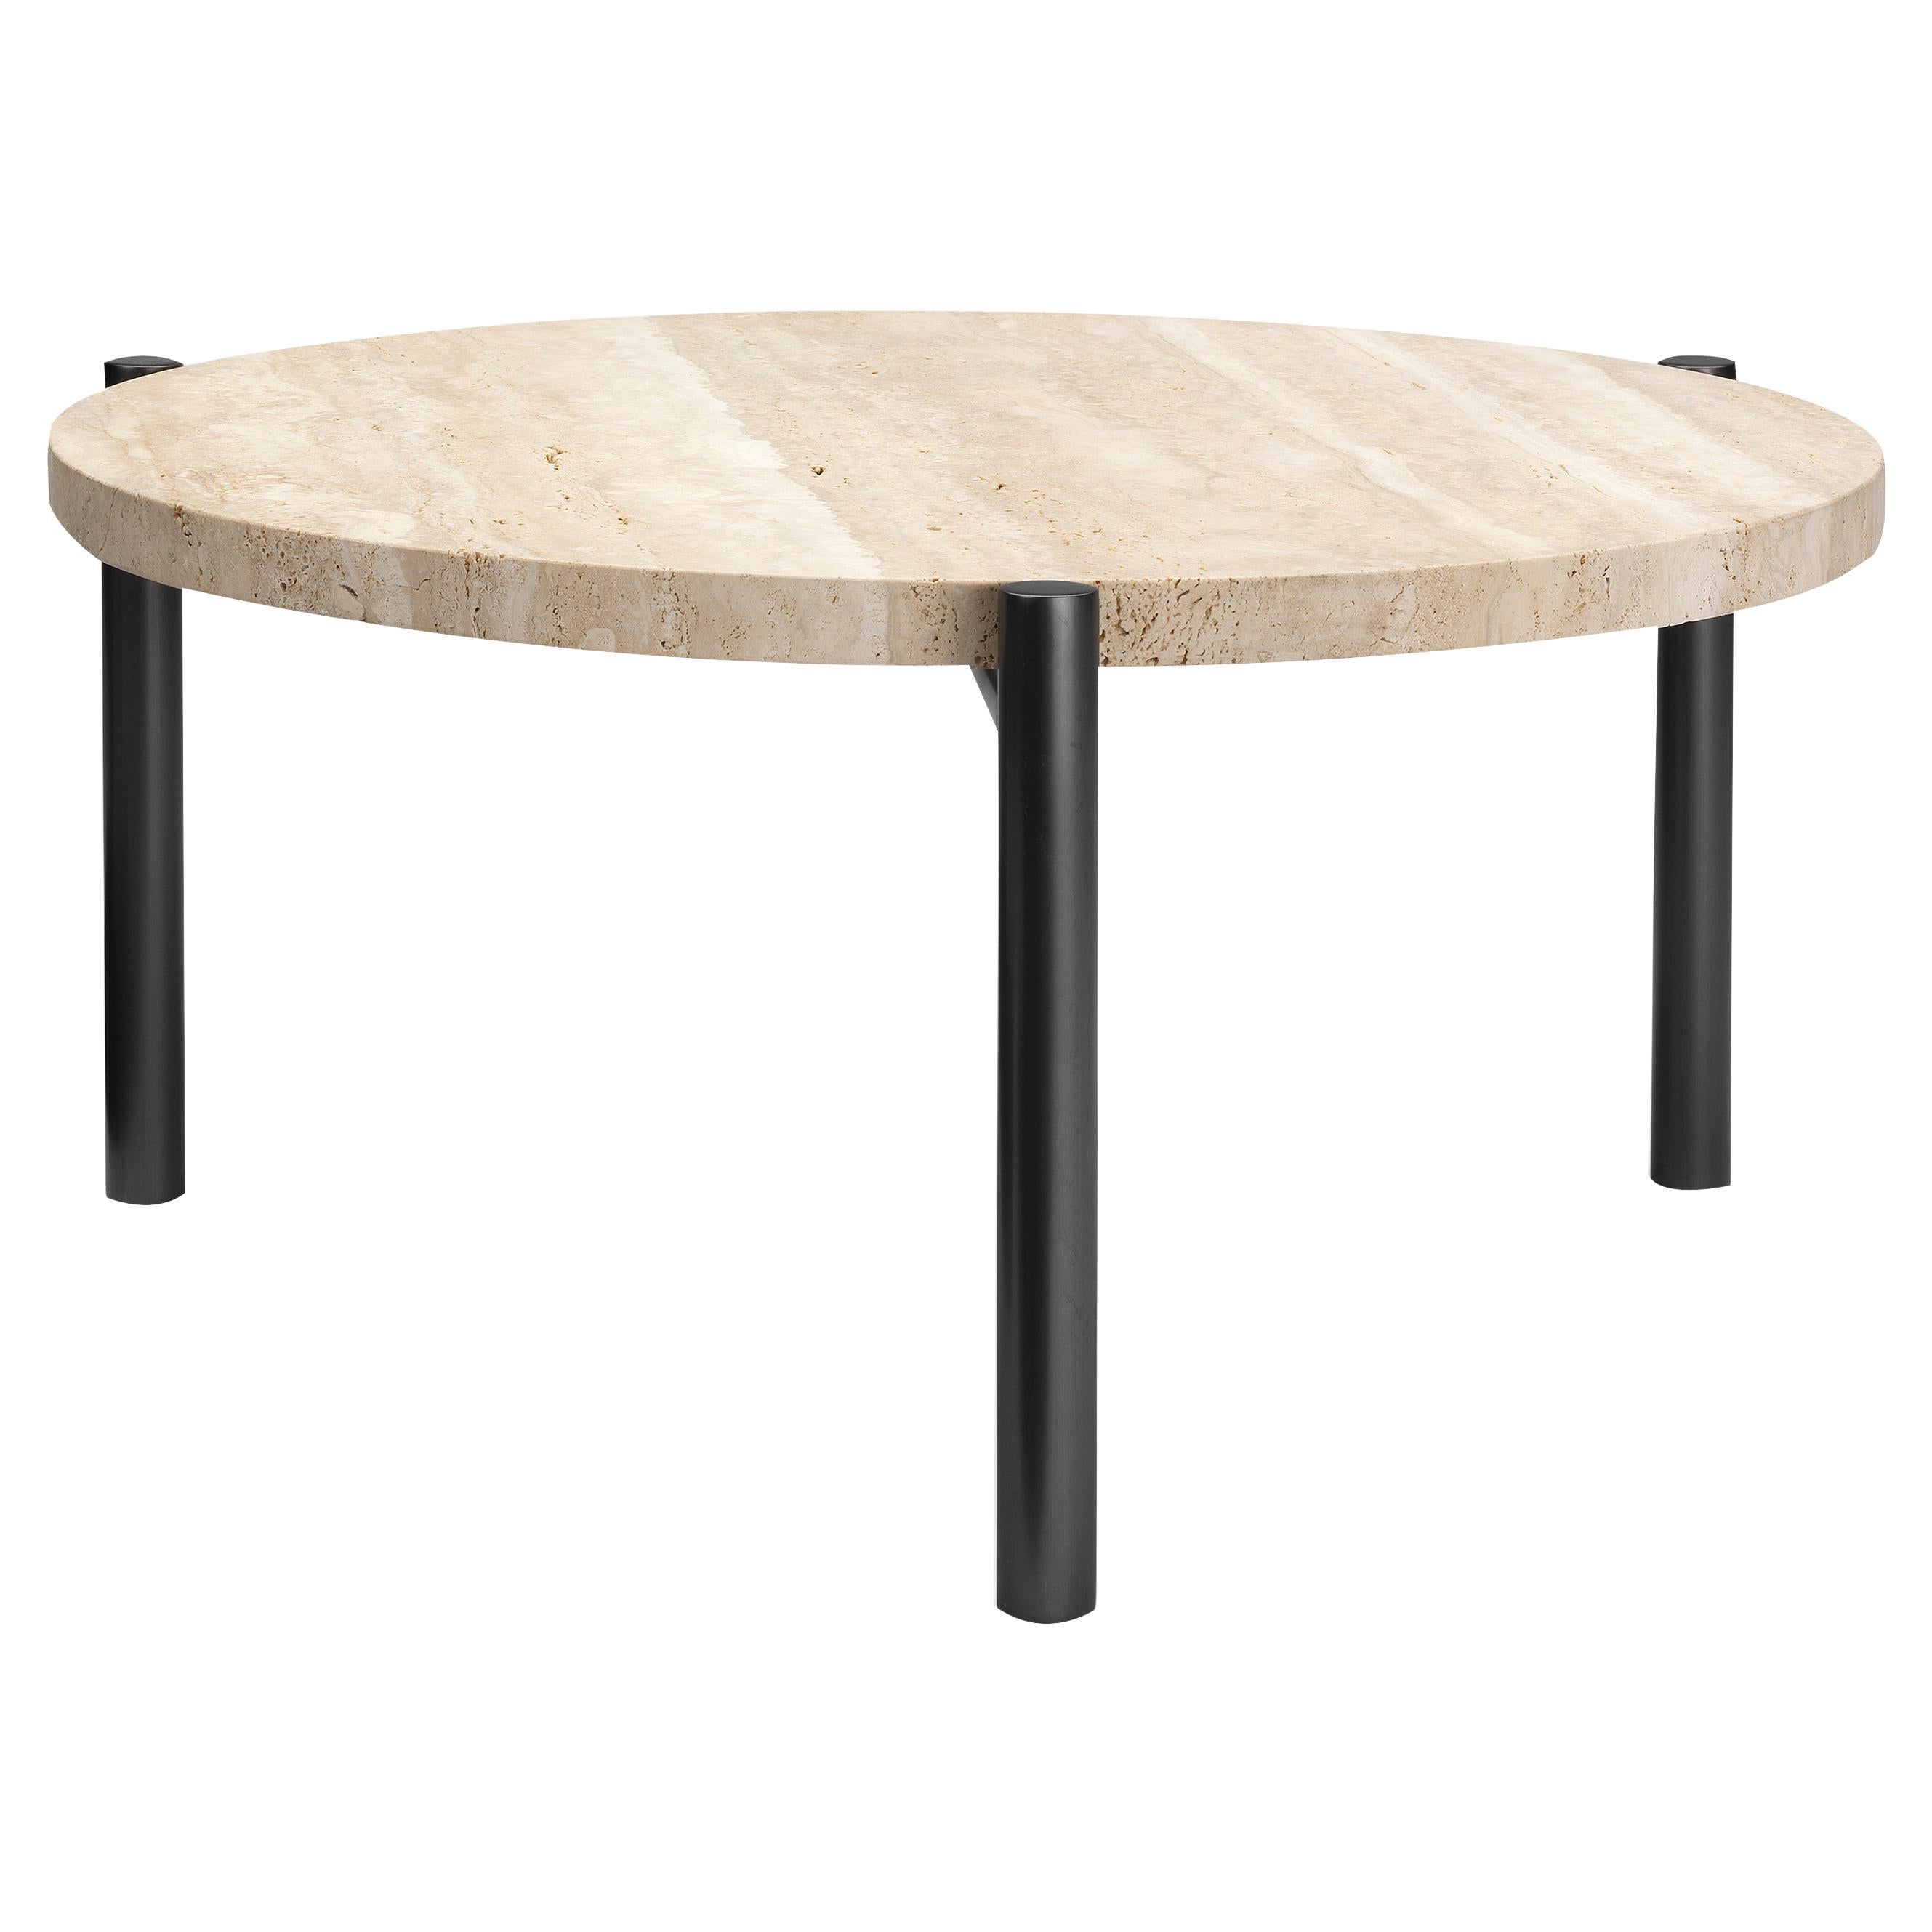 Tivoli Side Table Round 3 Legs Brass Or, 3 Leg Round Coffee Table